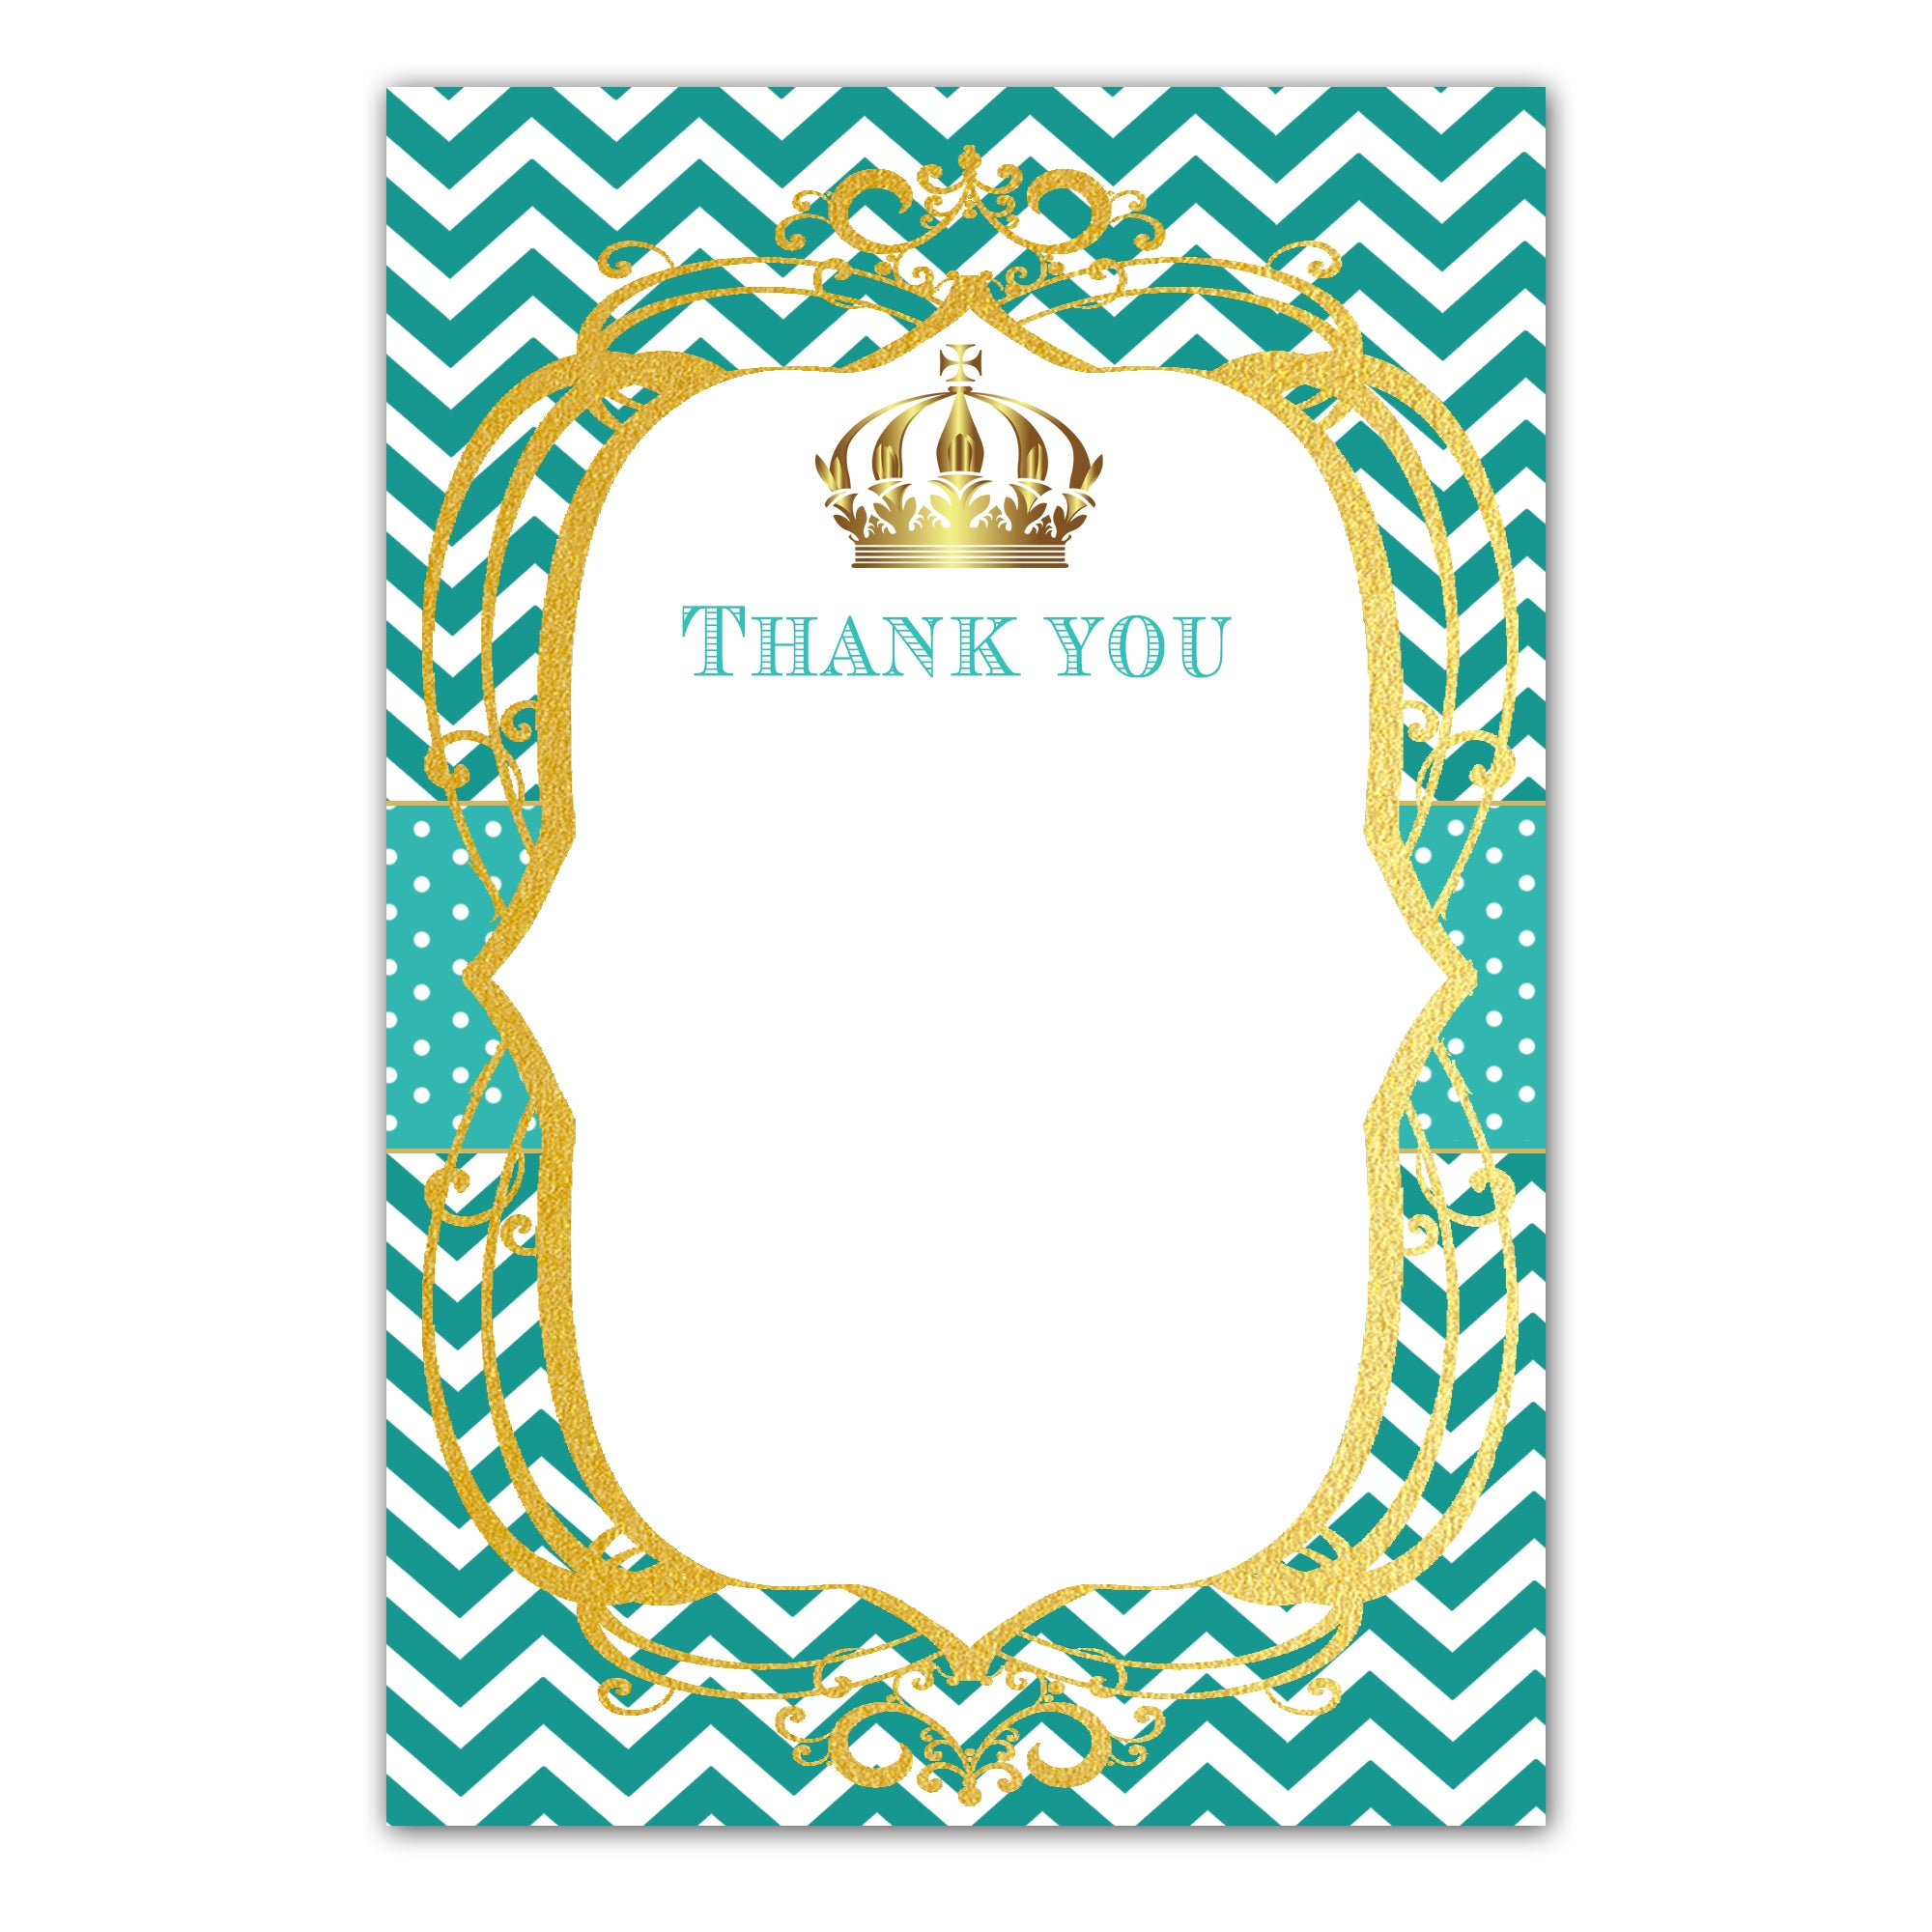 Prince princess thank you card teal gold + envelopes